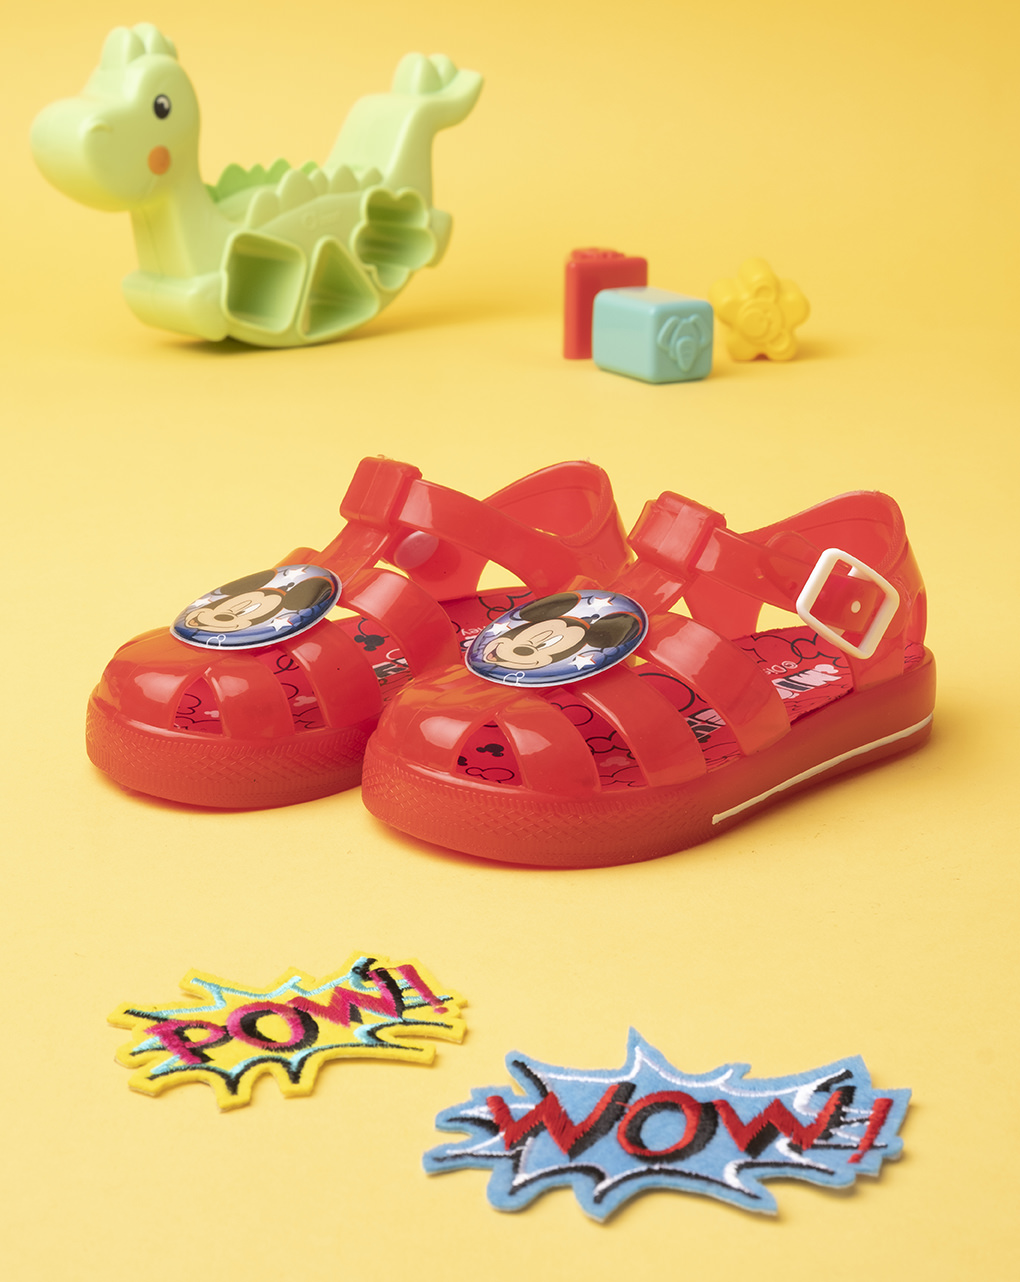 "mickey mouse" jelly sandal - Disney